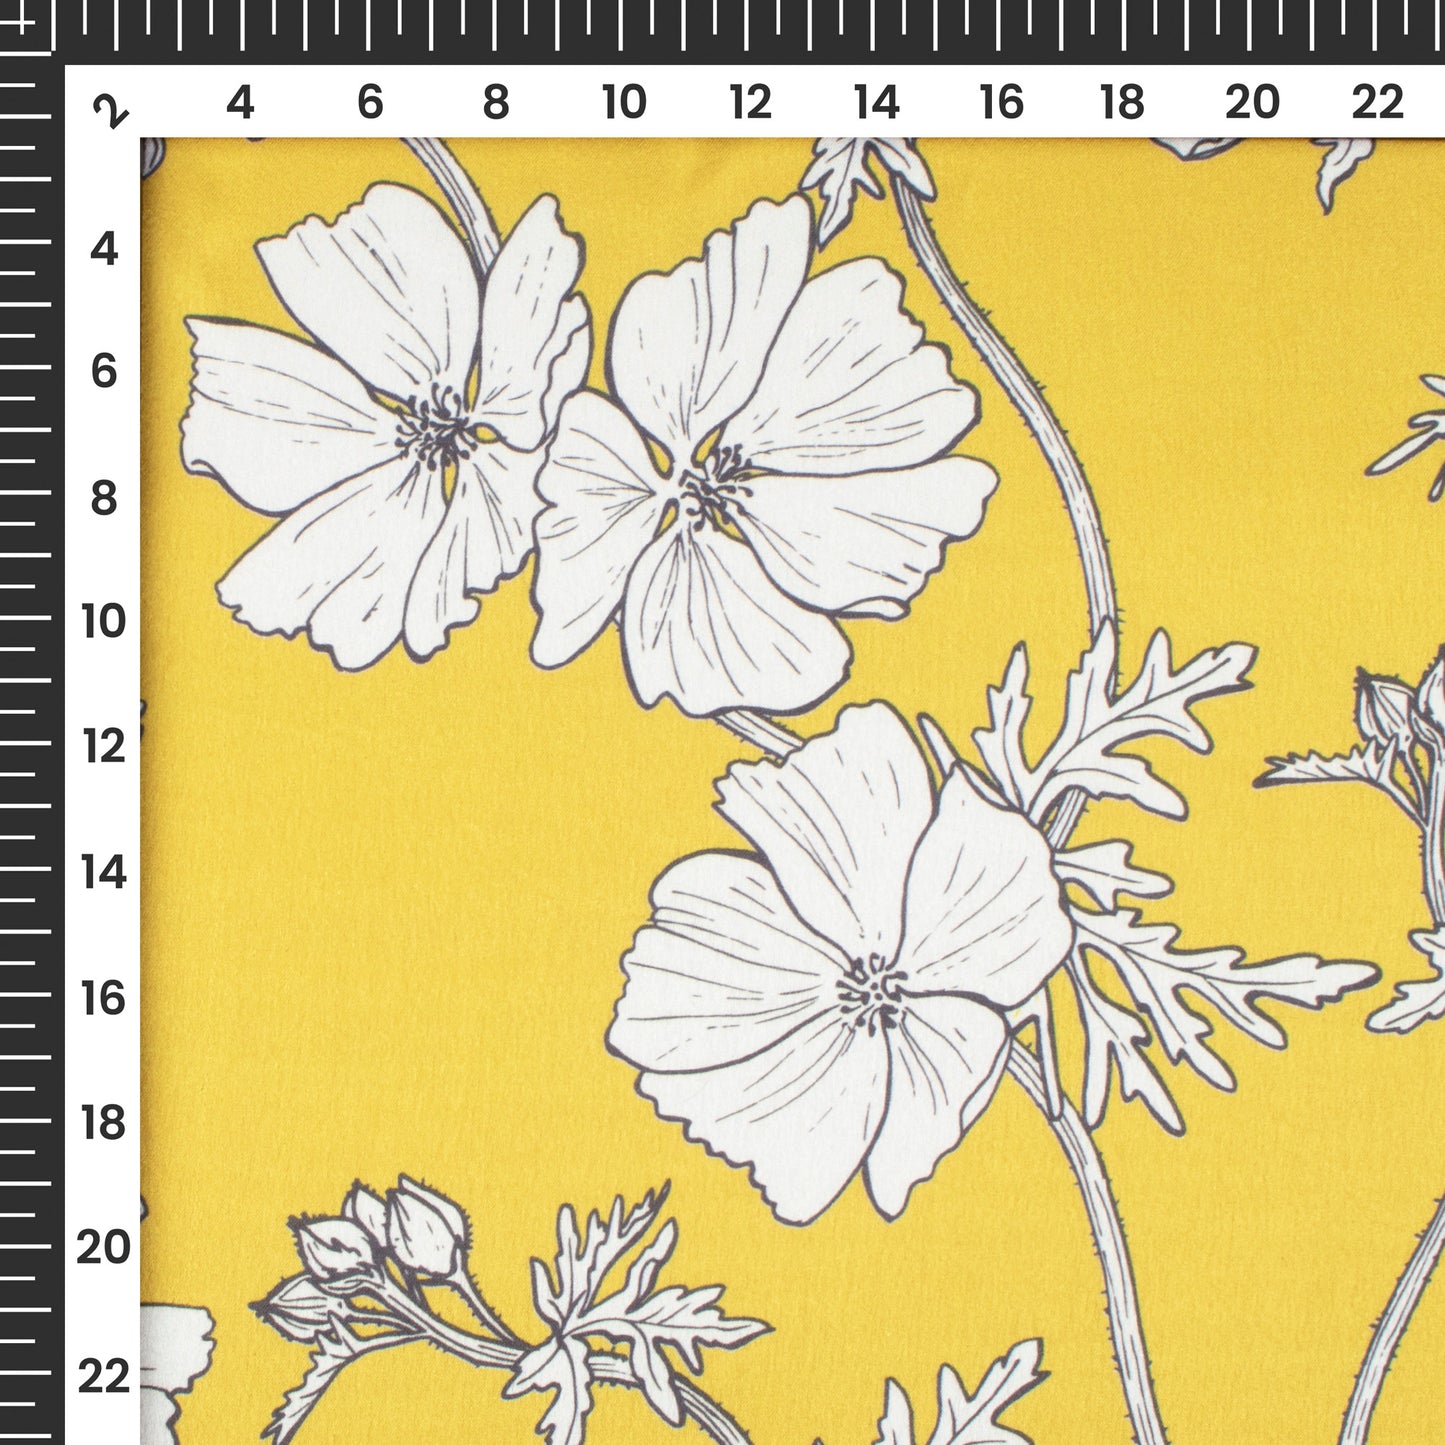 Lemon Yellow Floral Digital Print Japan Satin Fabric